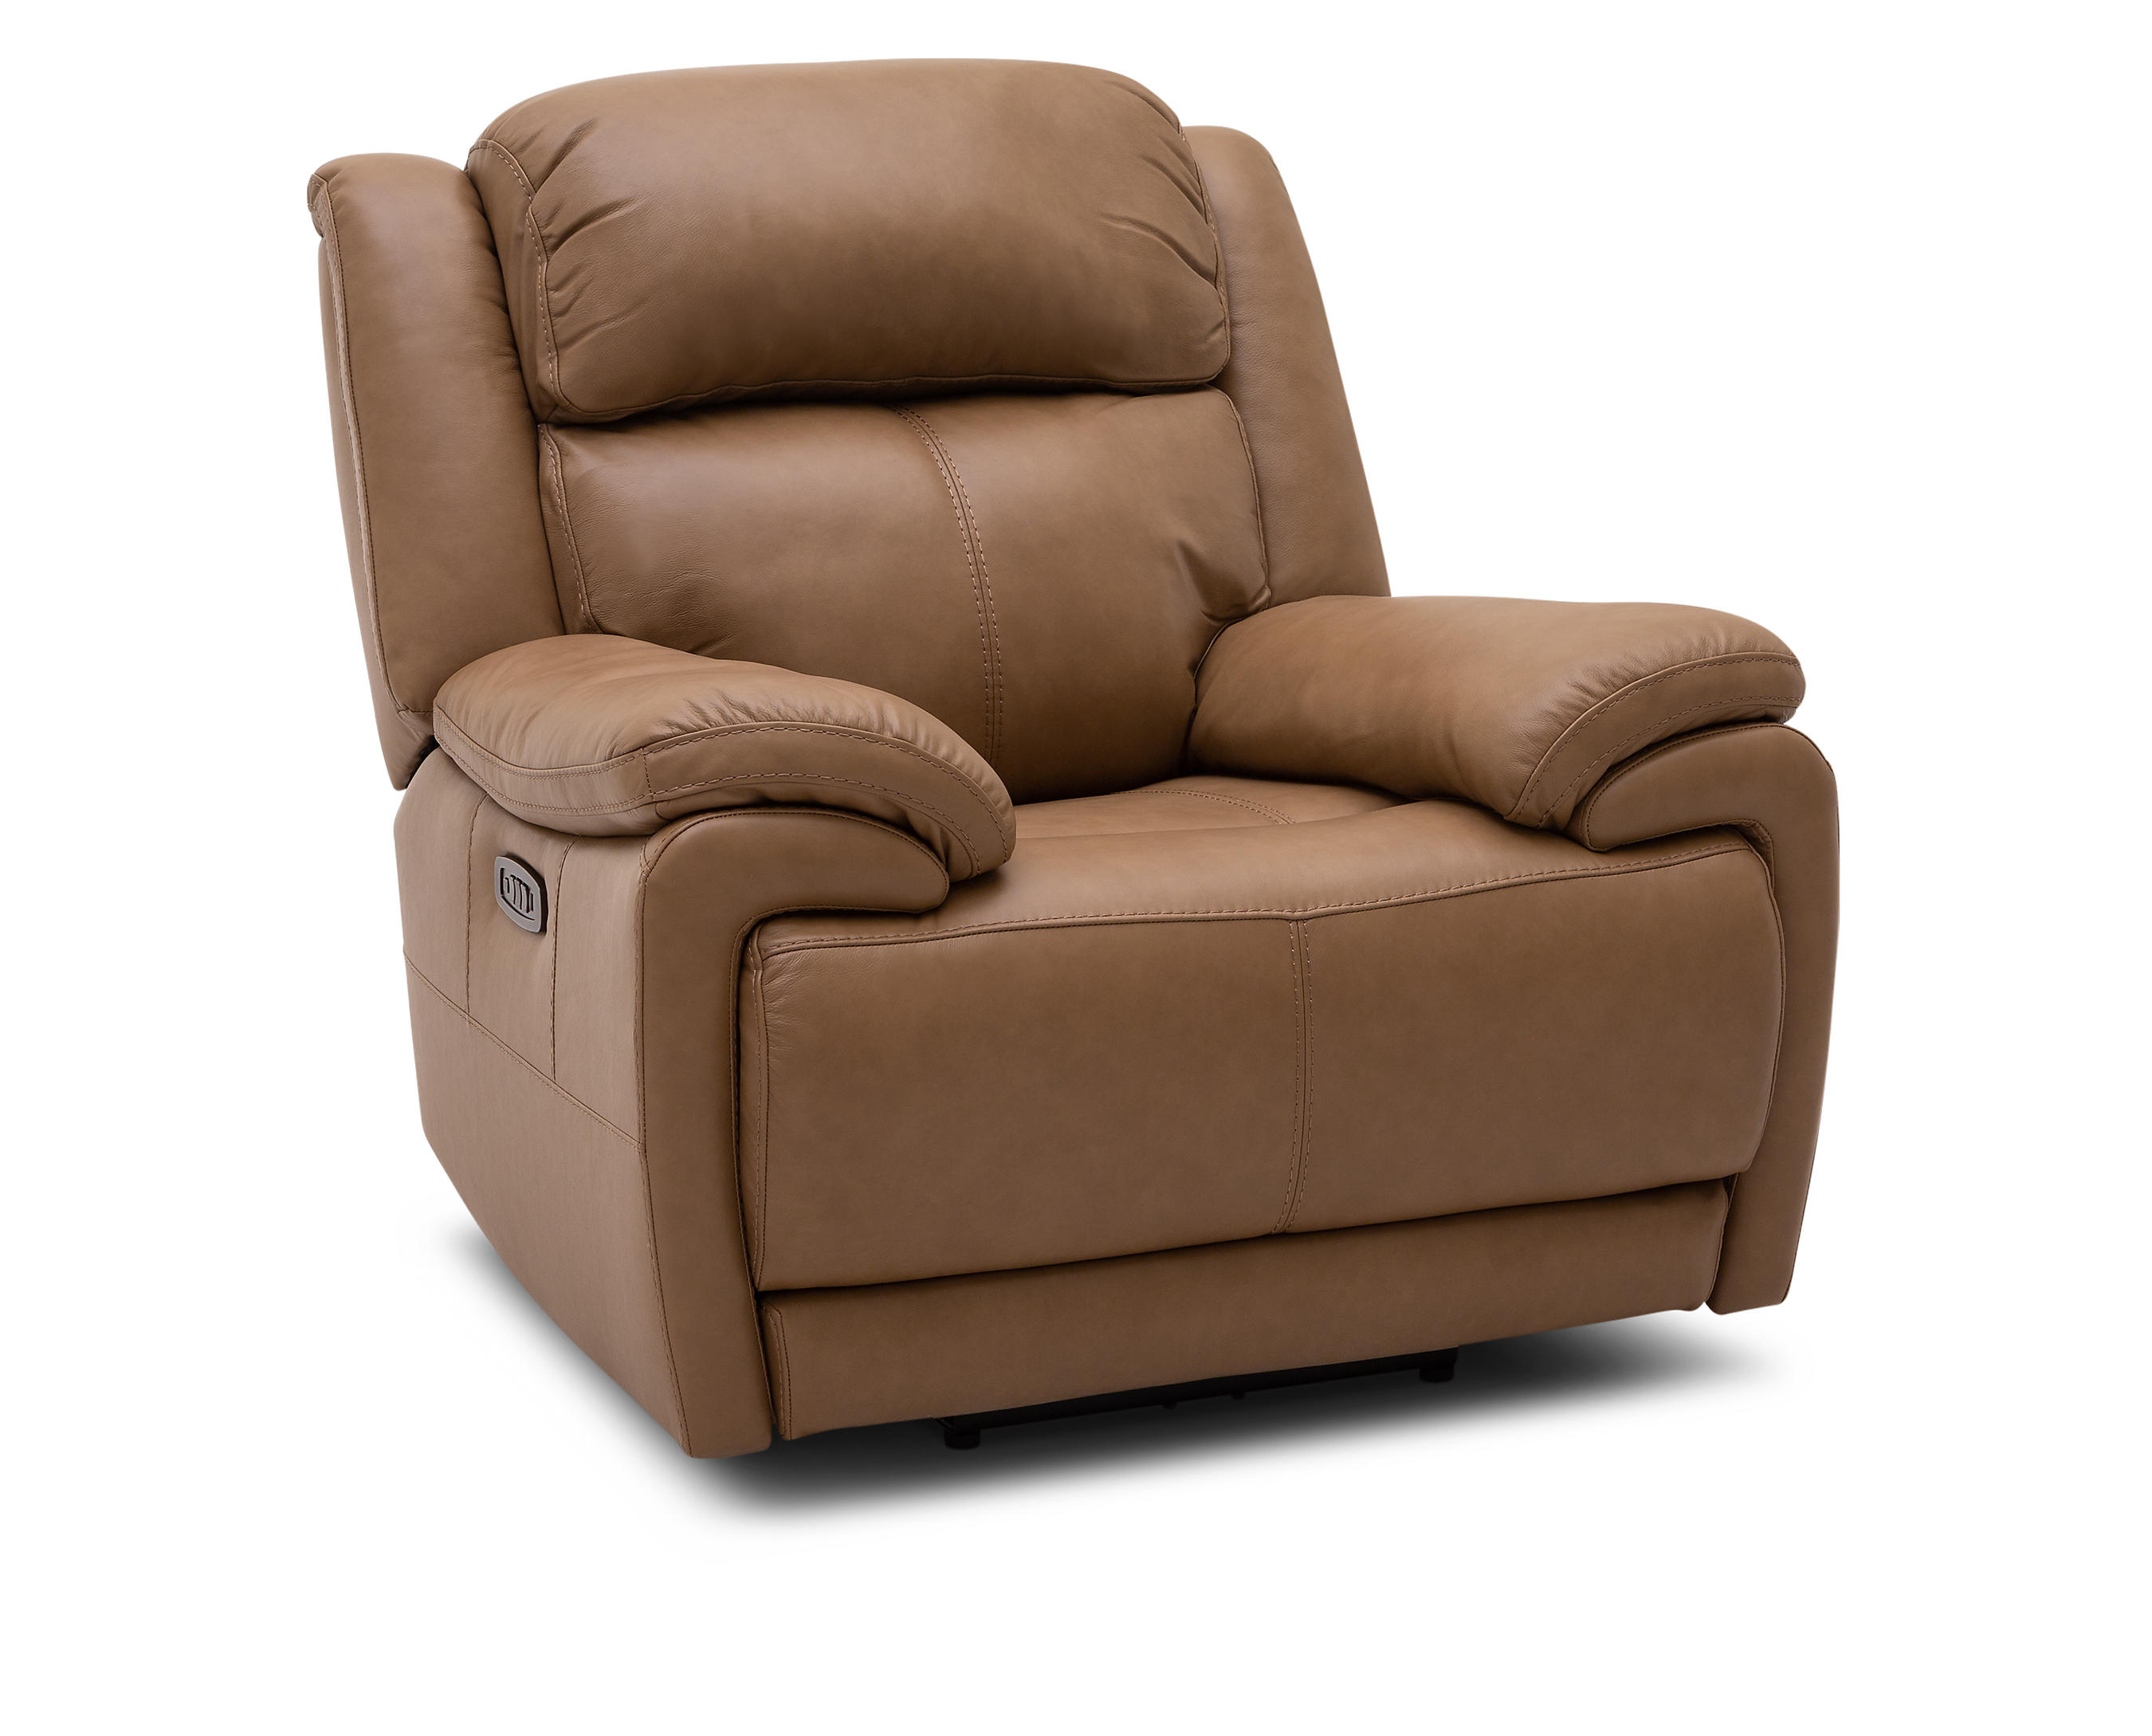 Avanti Power Recliner Furniture Row, Avanti 5 Piece Power Leather Sectional Sofa